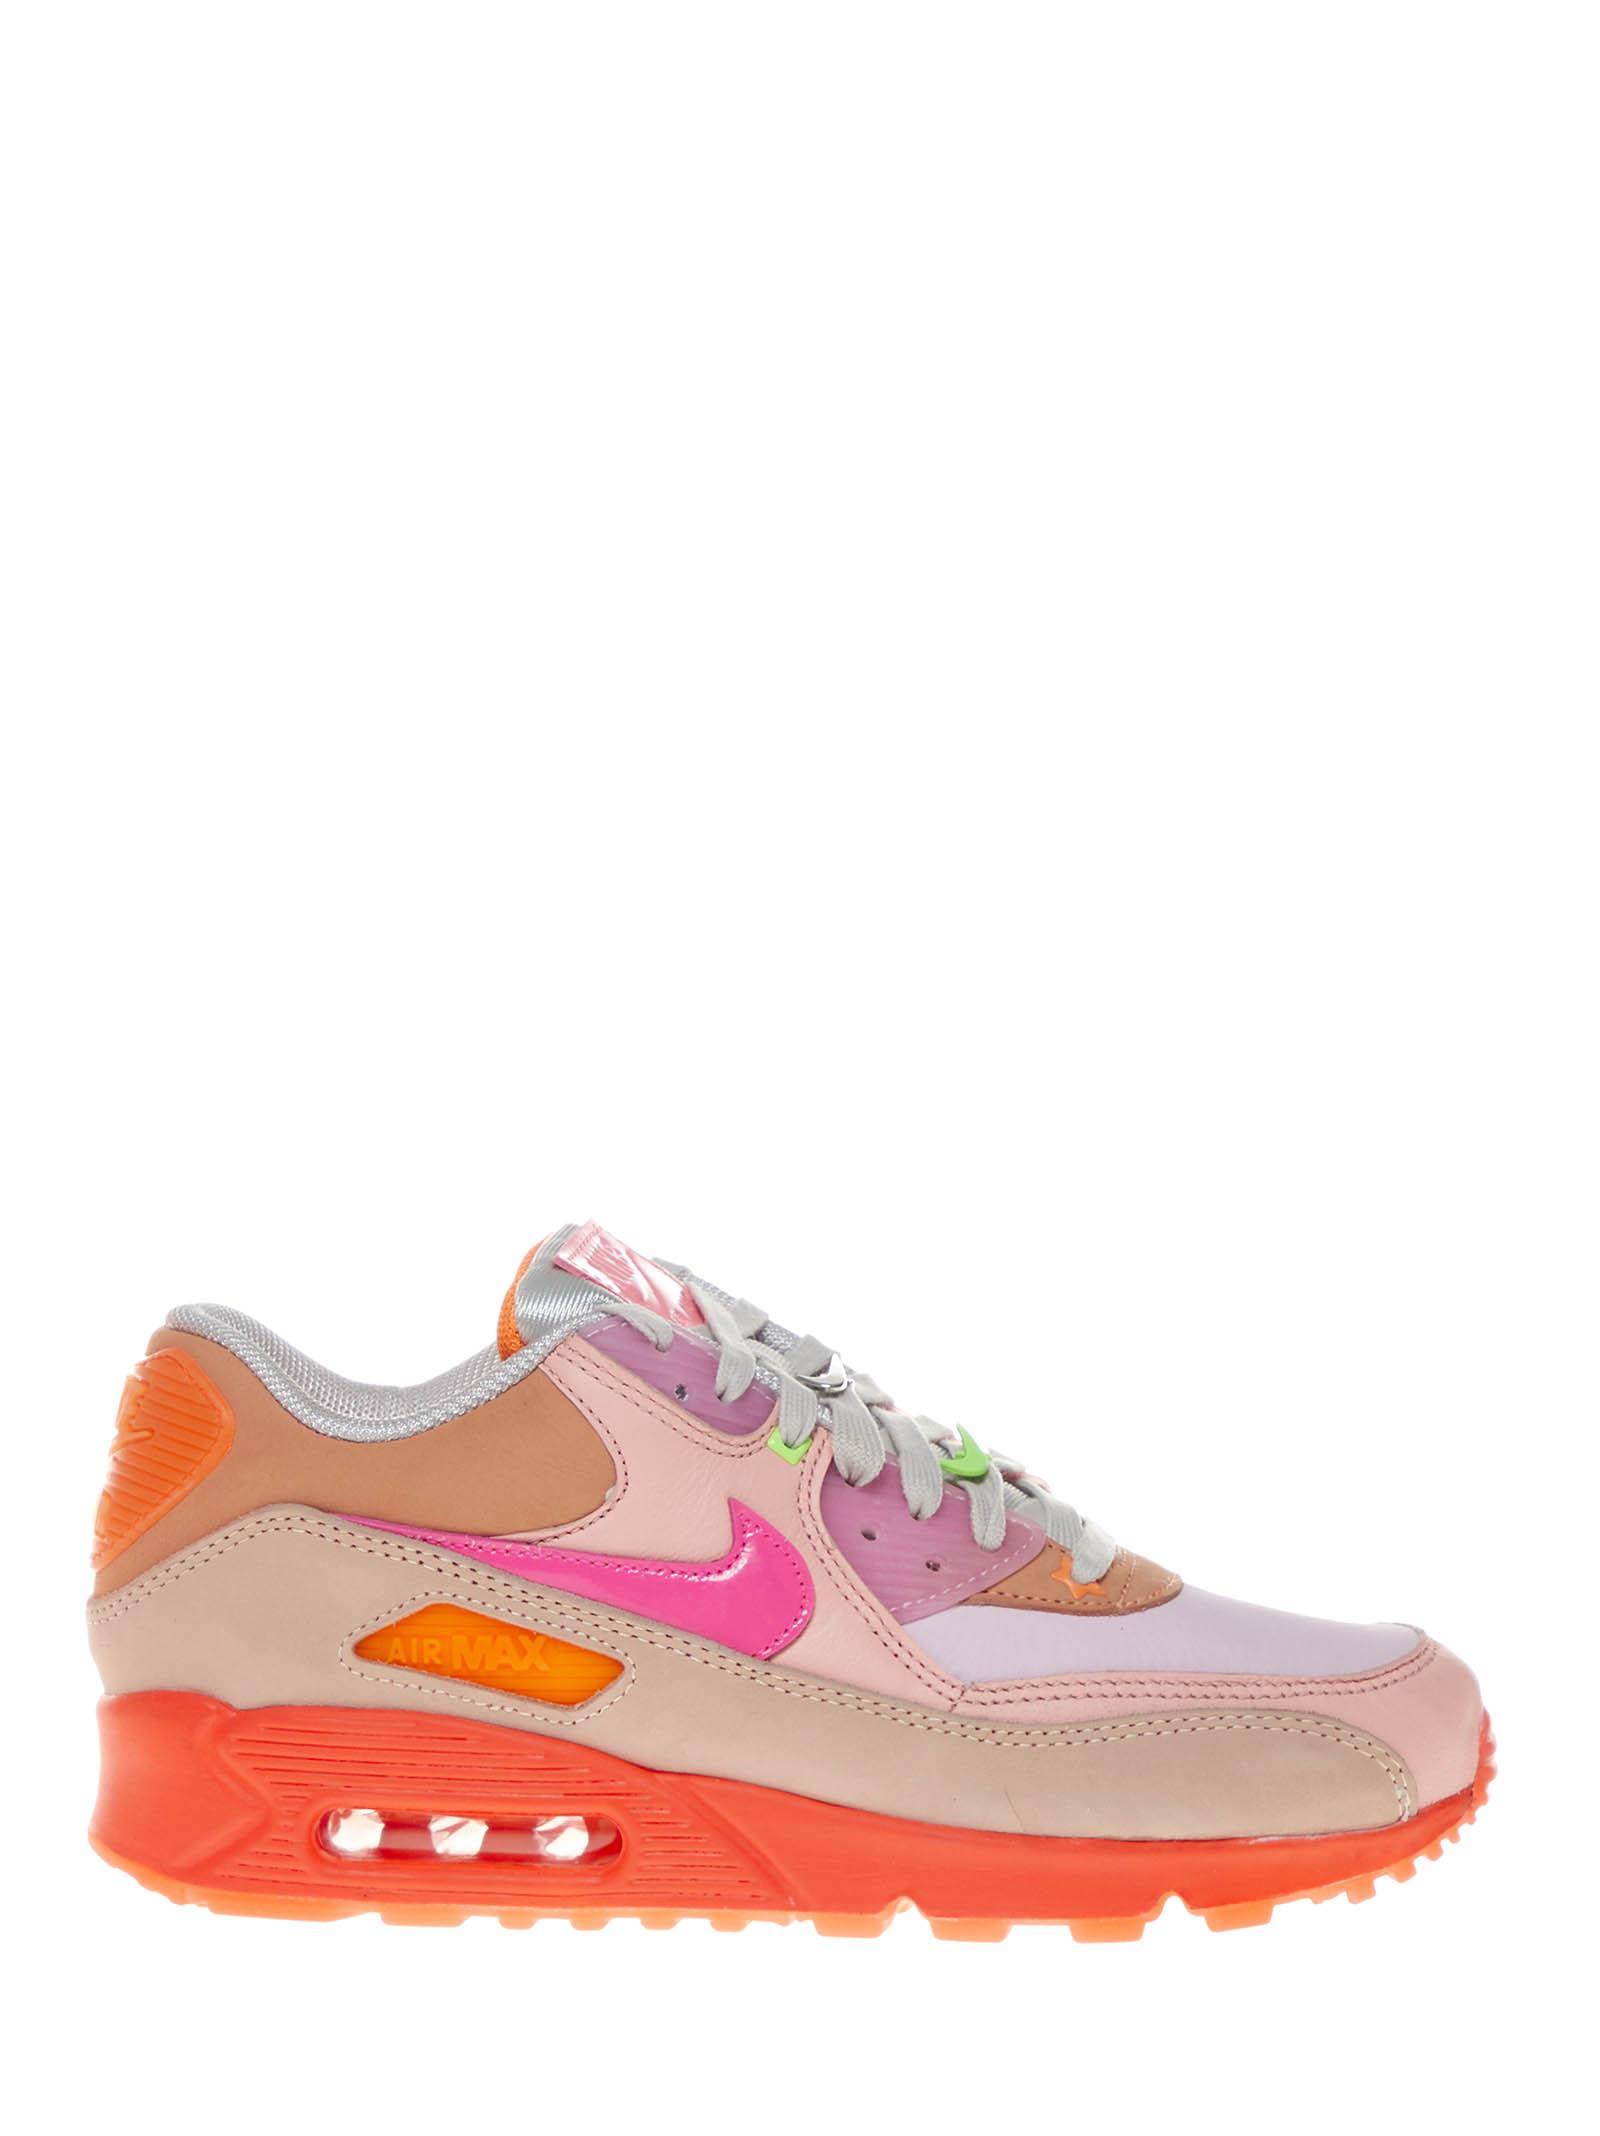 pink and orange nike shoe women sale